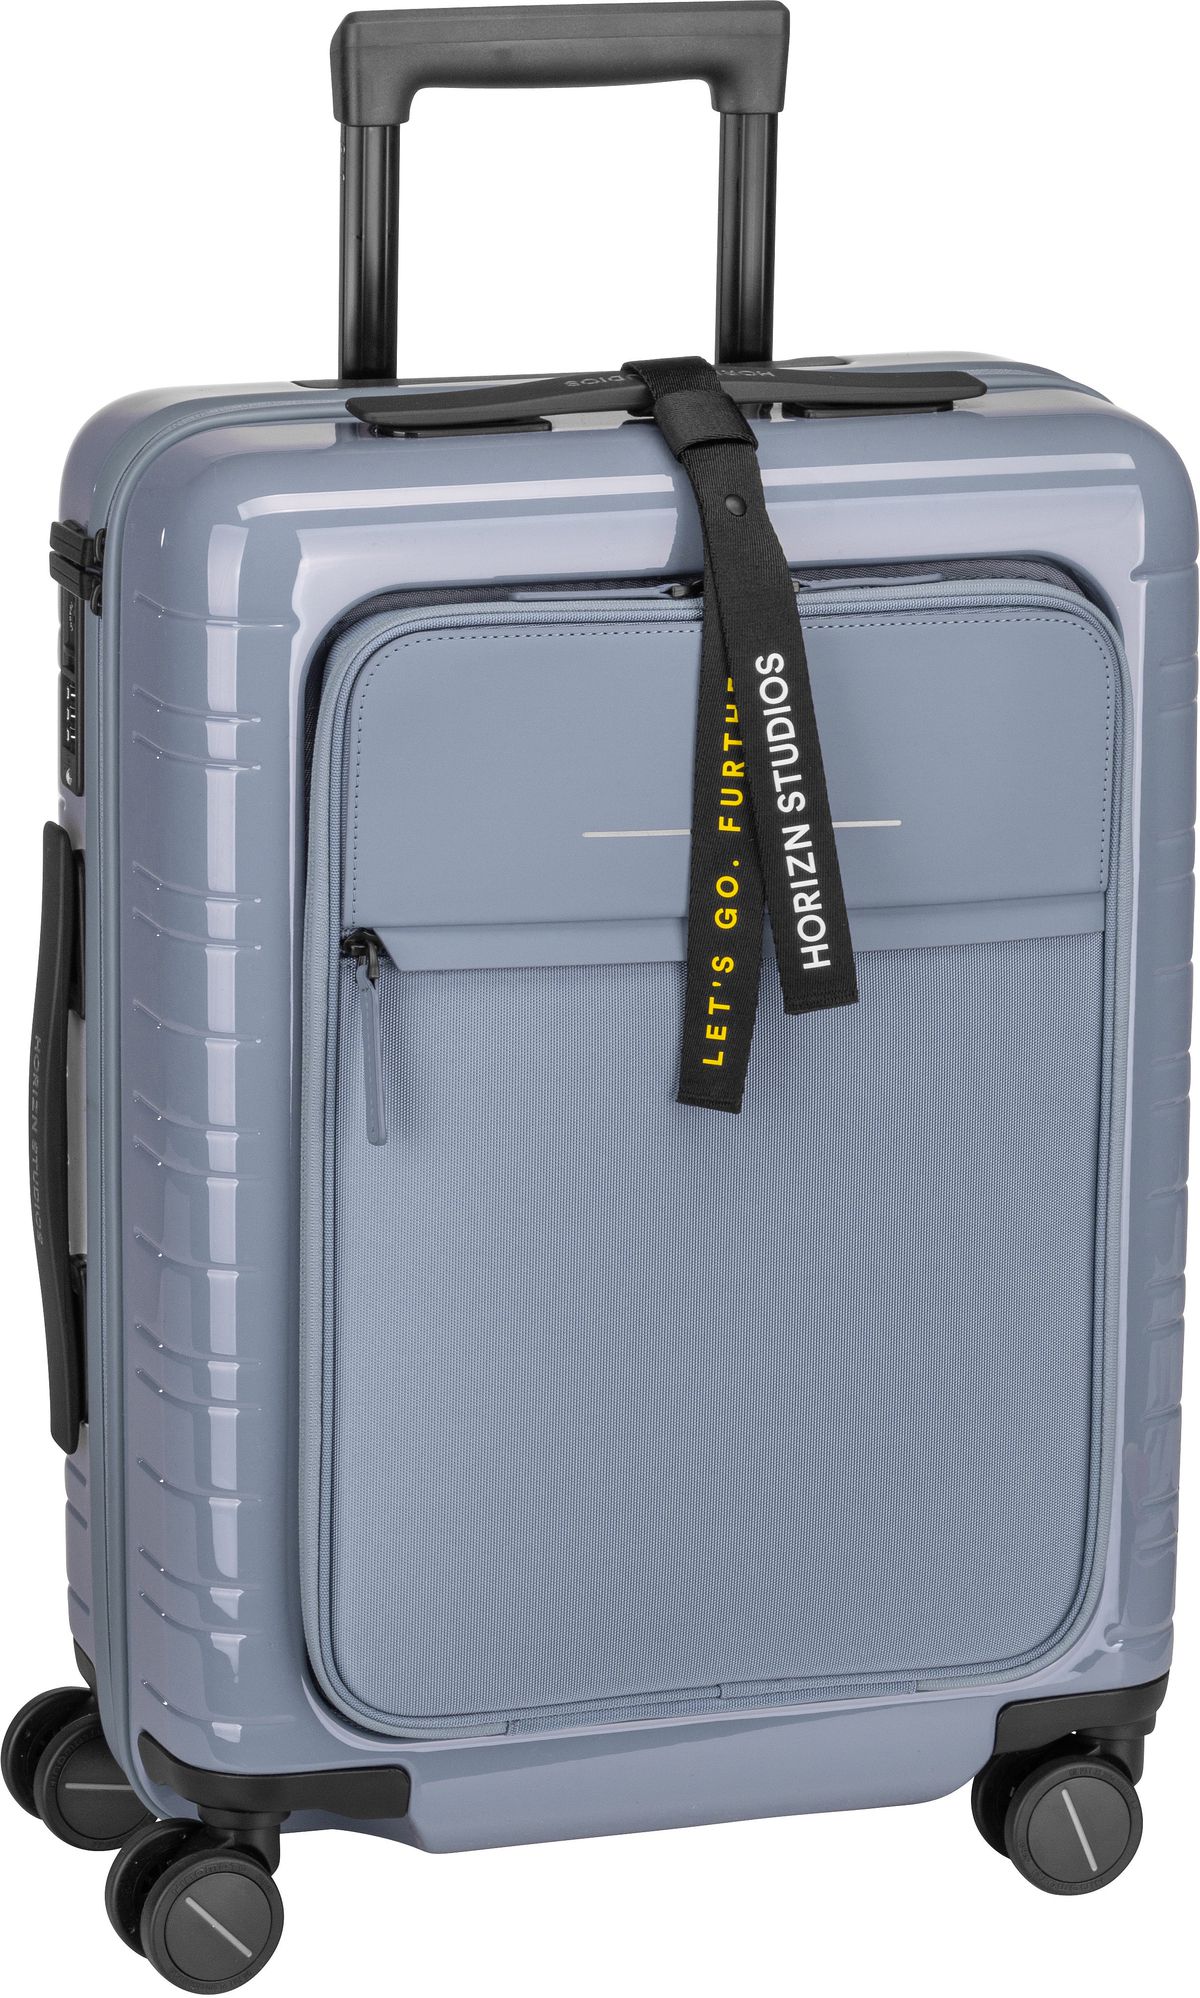 Horizn Studios M5 Essential Cabin Luggage - Glossy Blue Vega